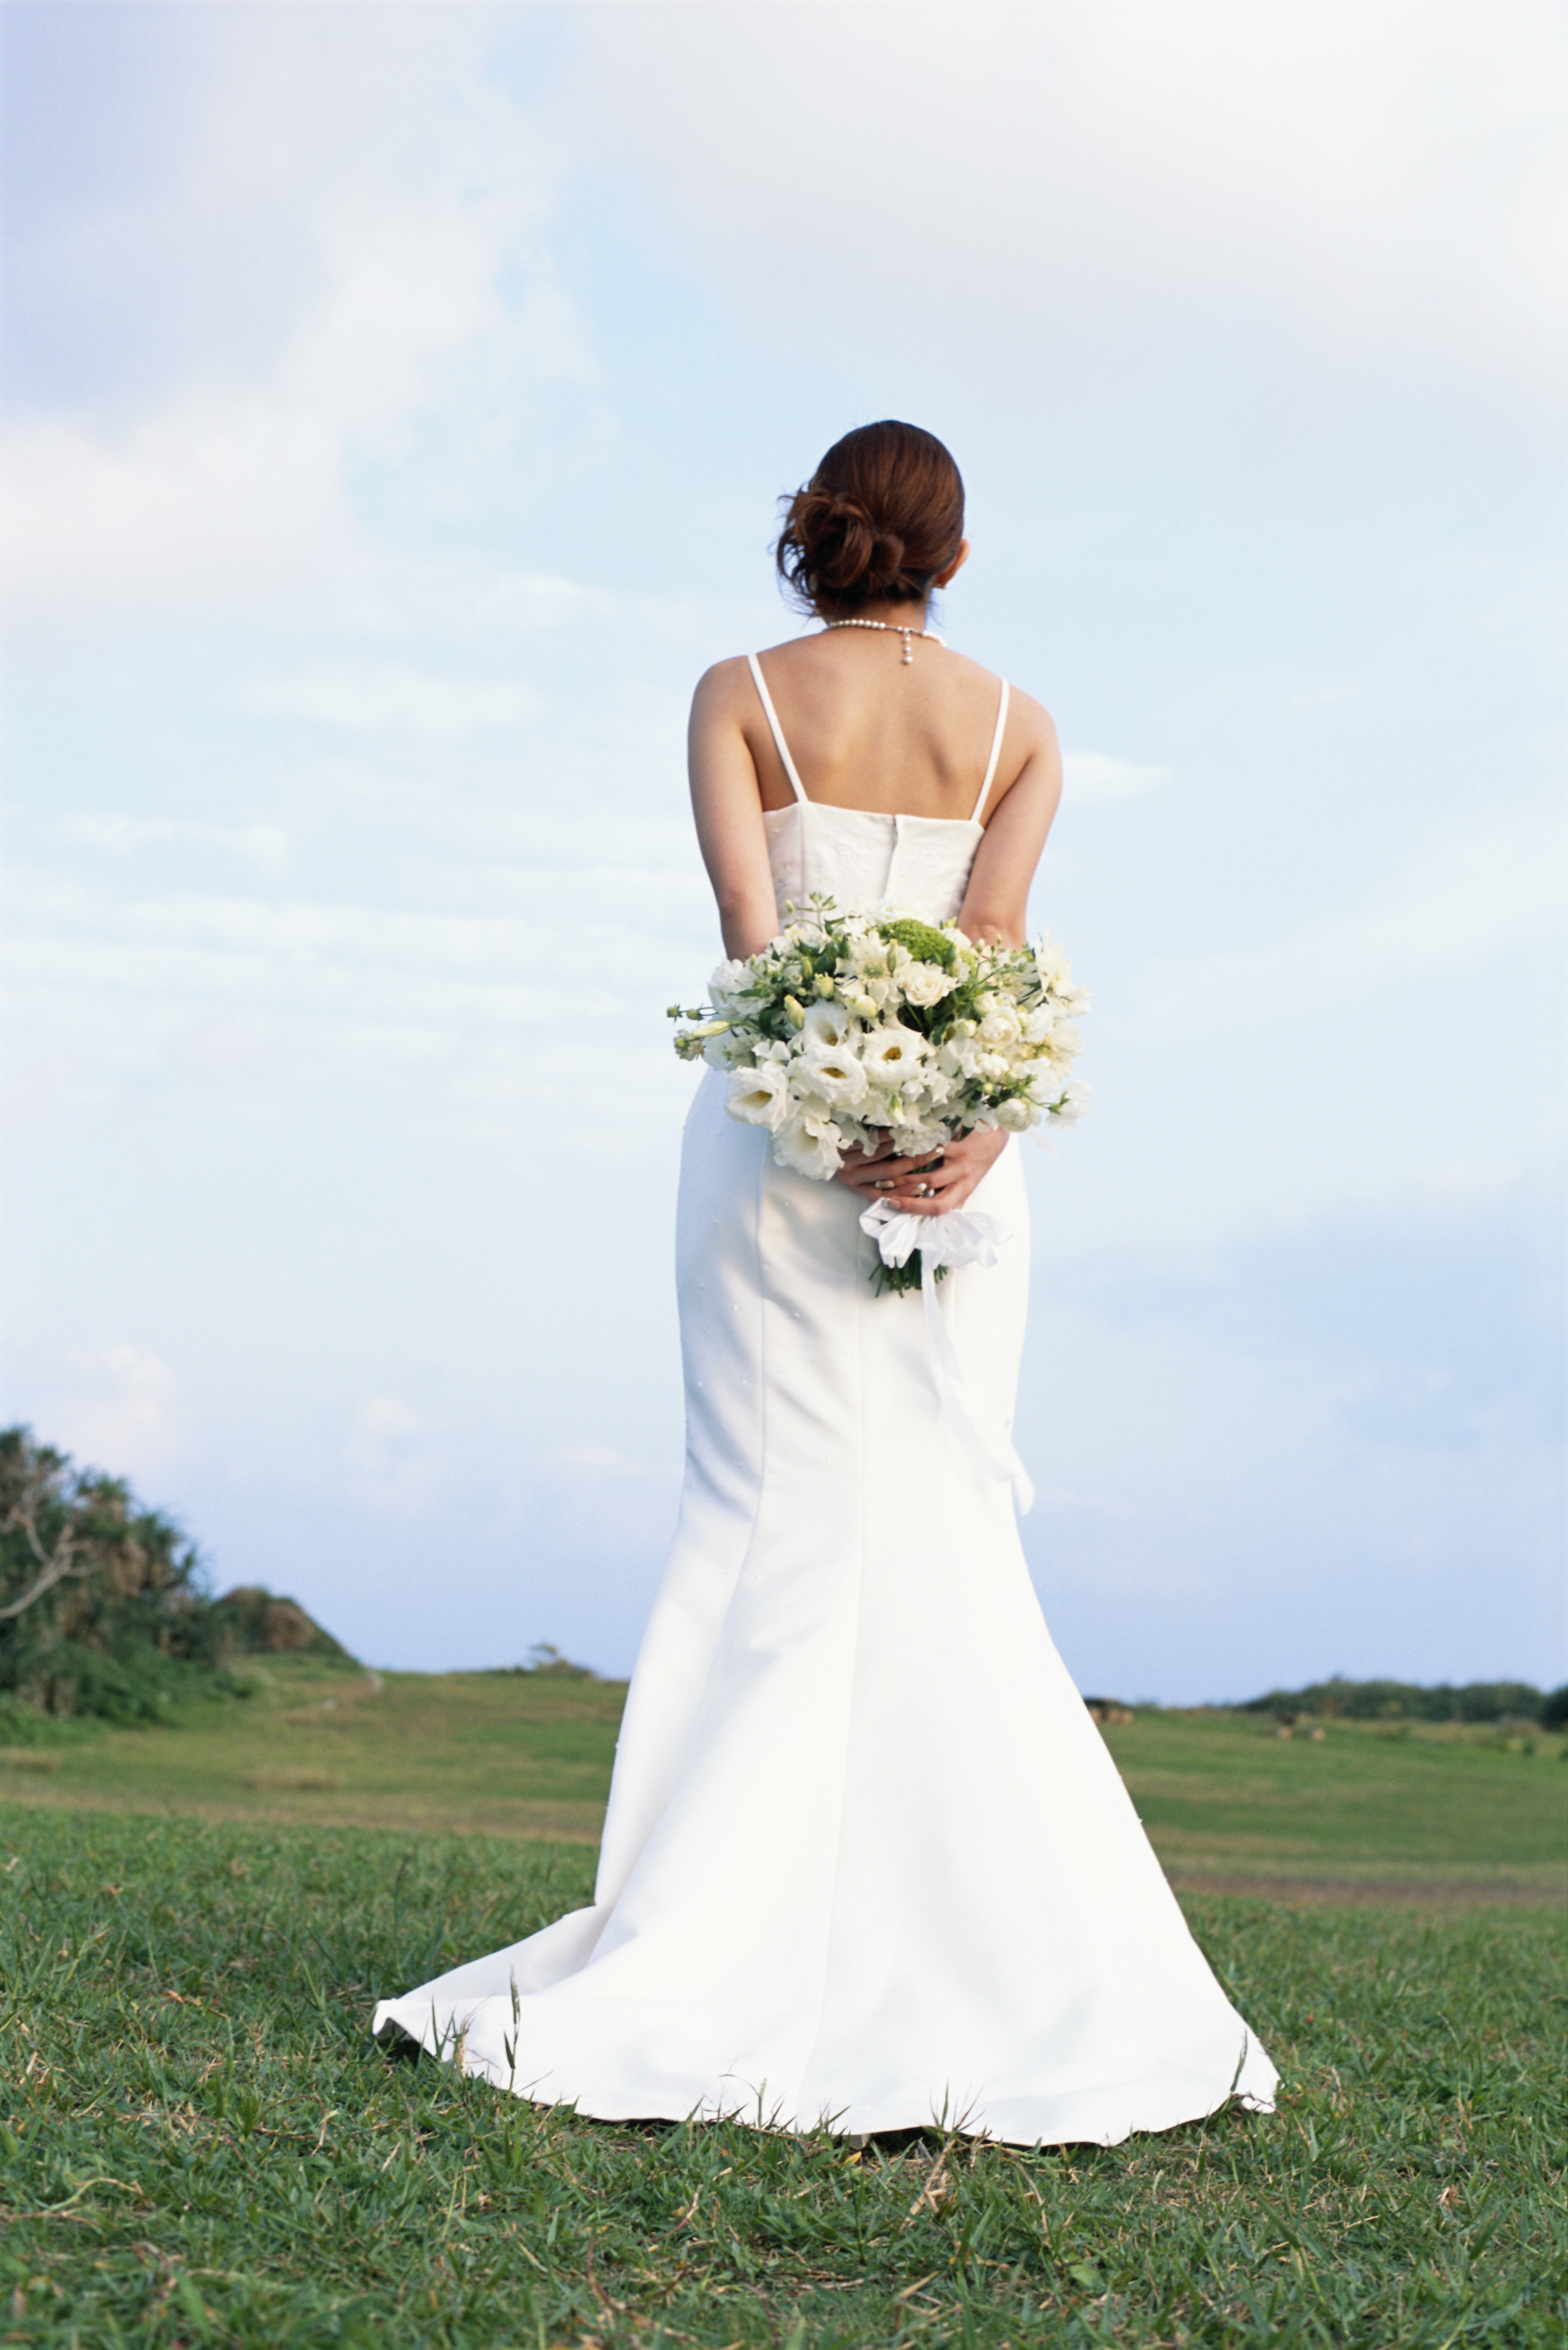 Une femme en robe blanche | Source : Getty Images